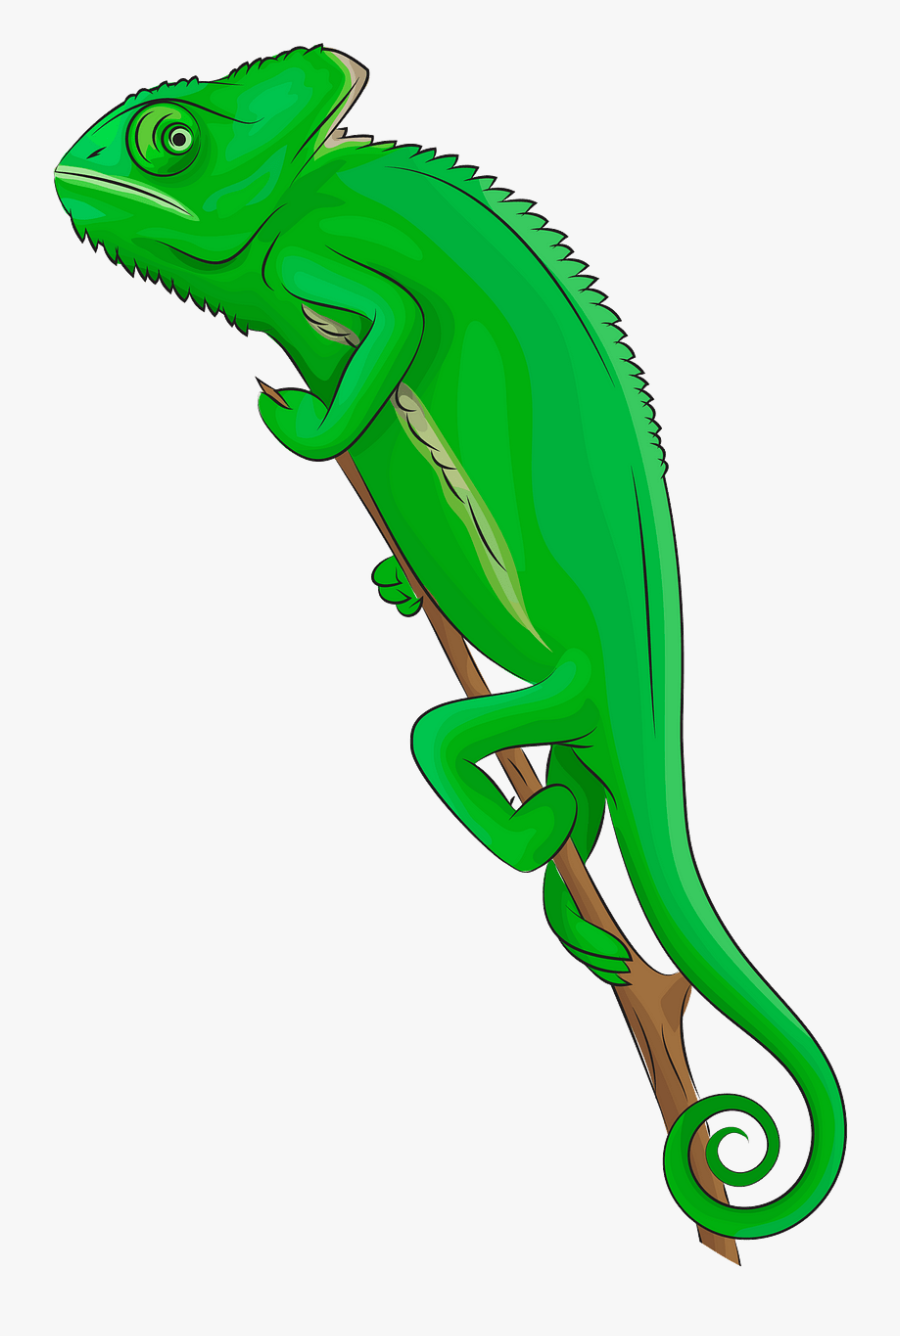 Common Chameleon, Transparent Clipart